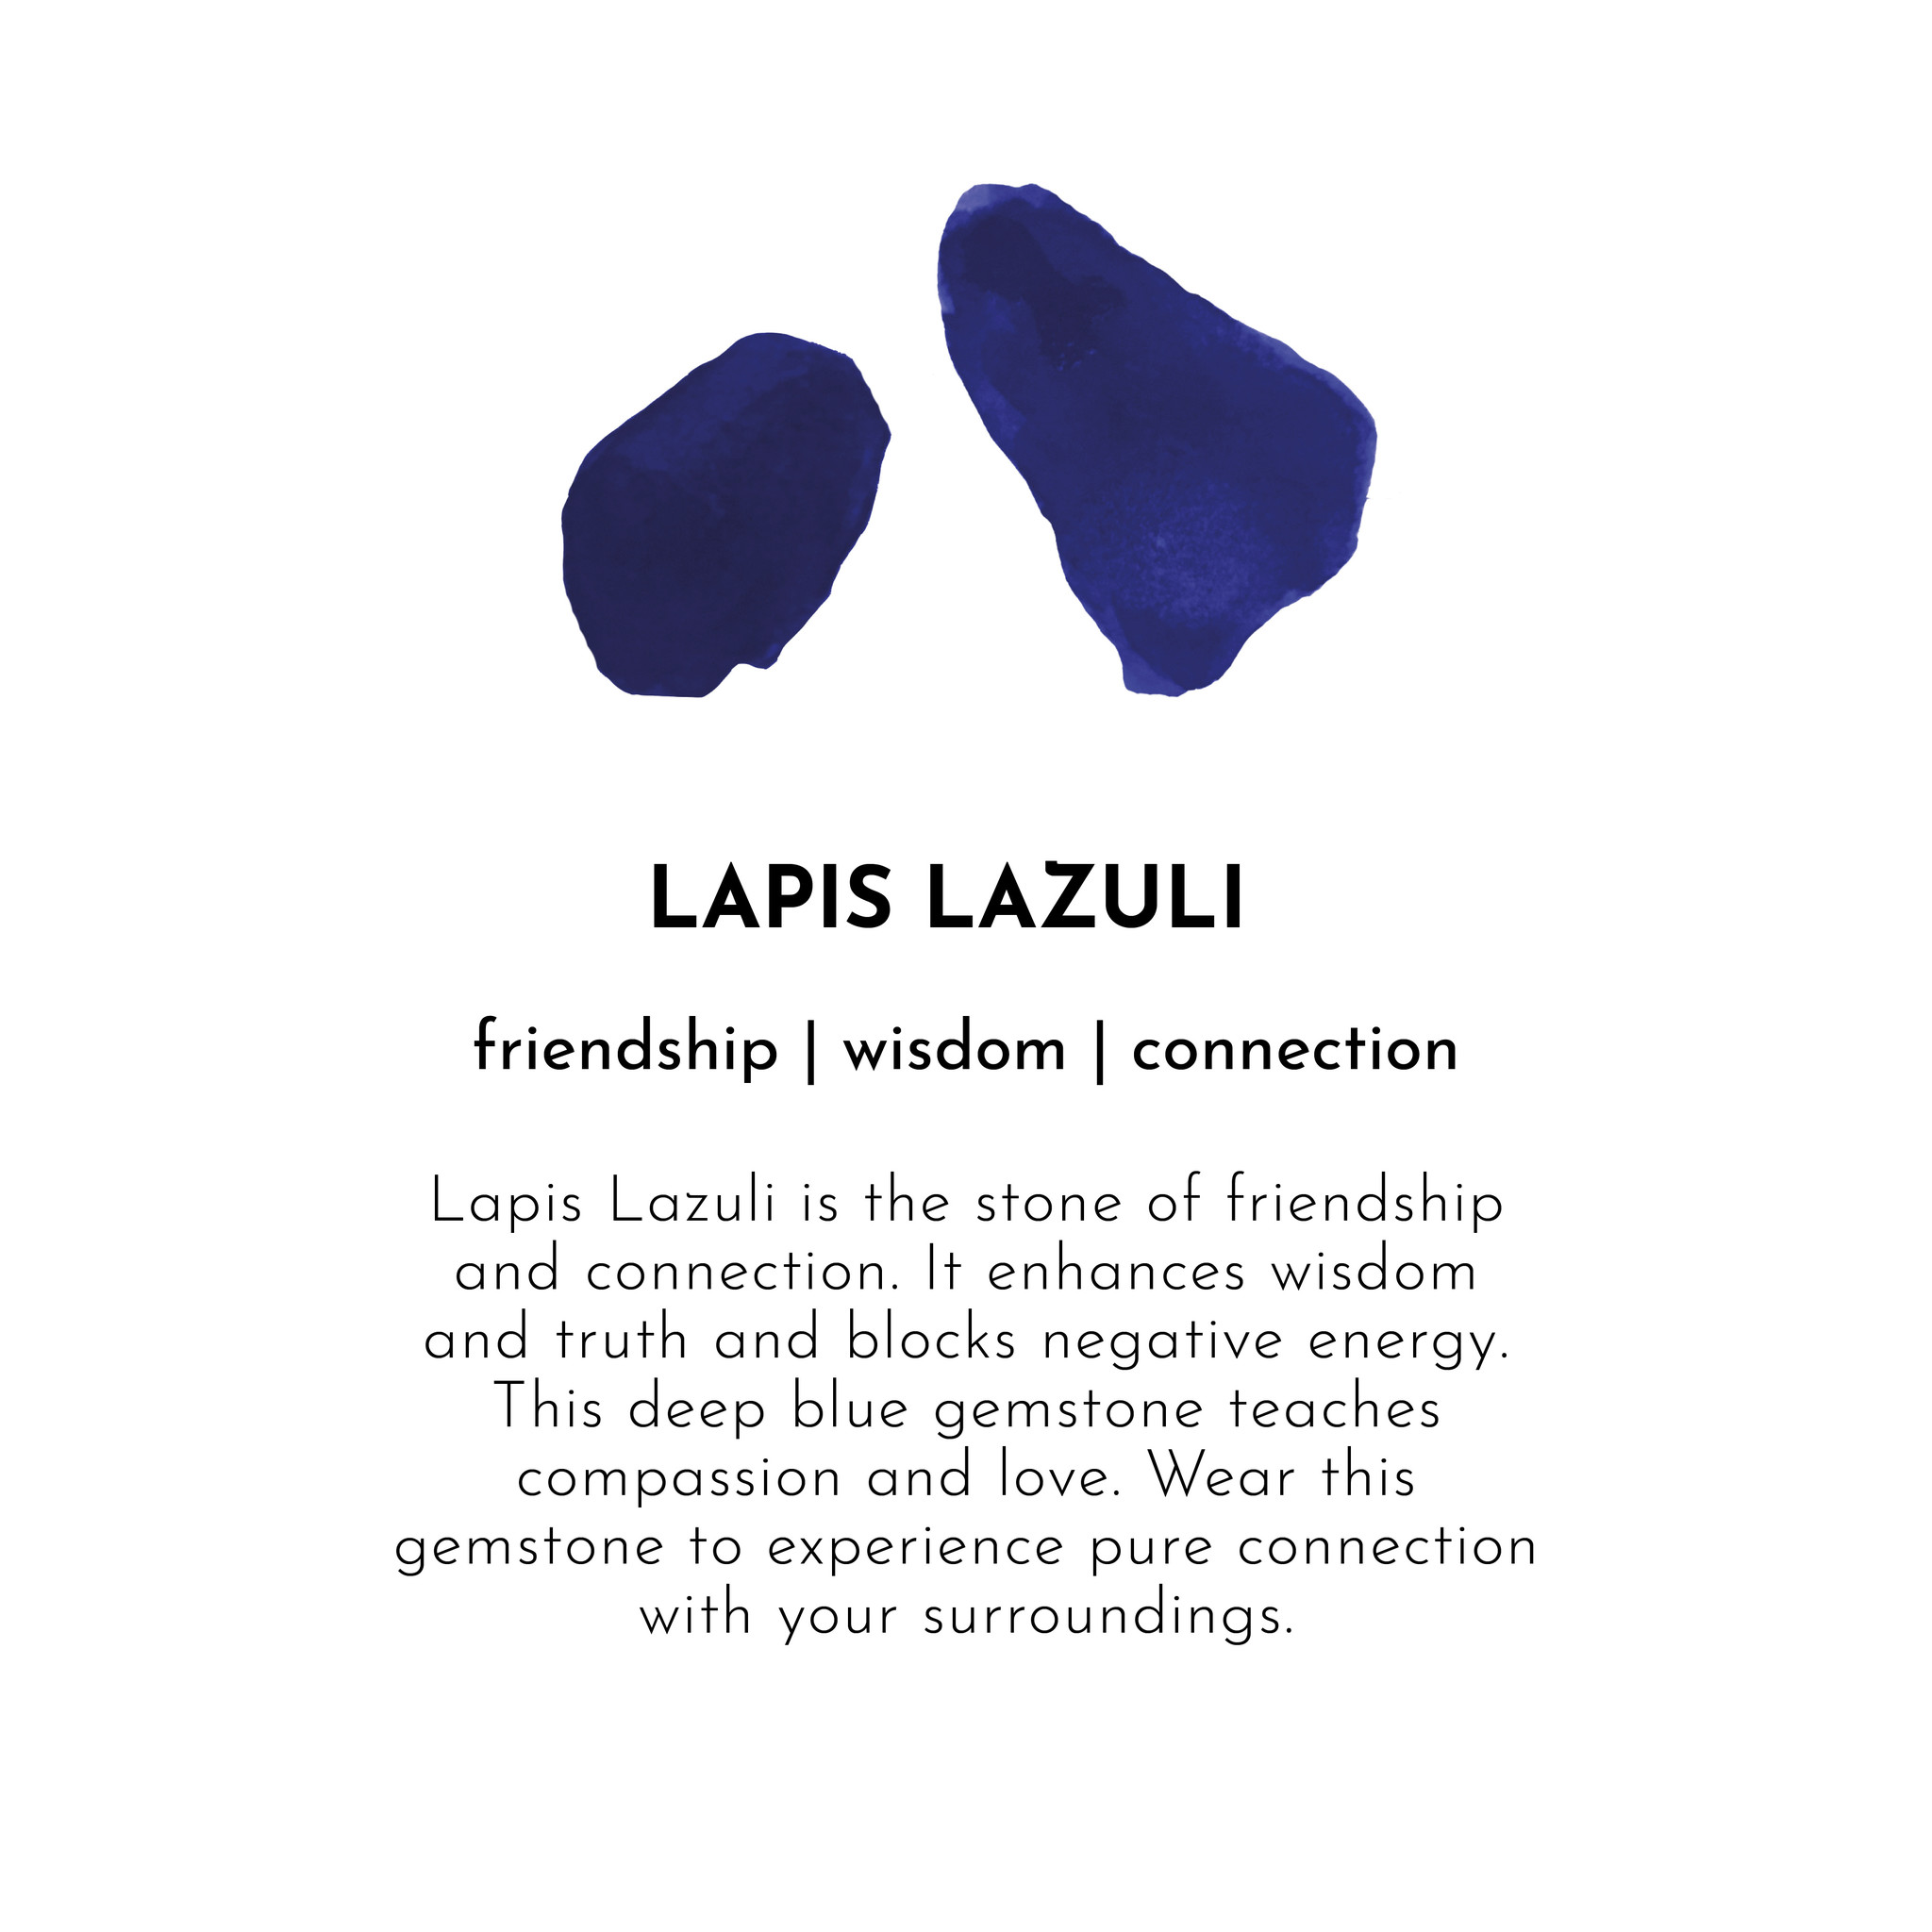 lapis lazuli friendship